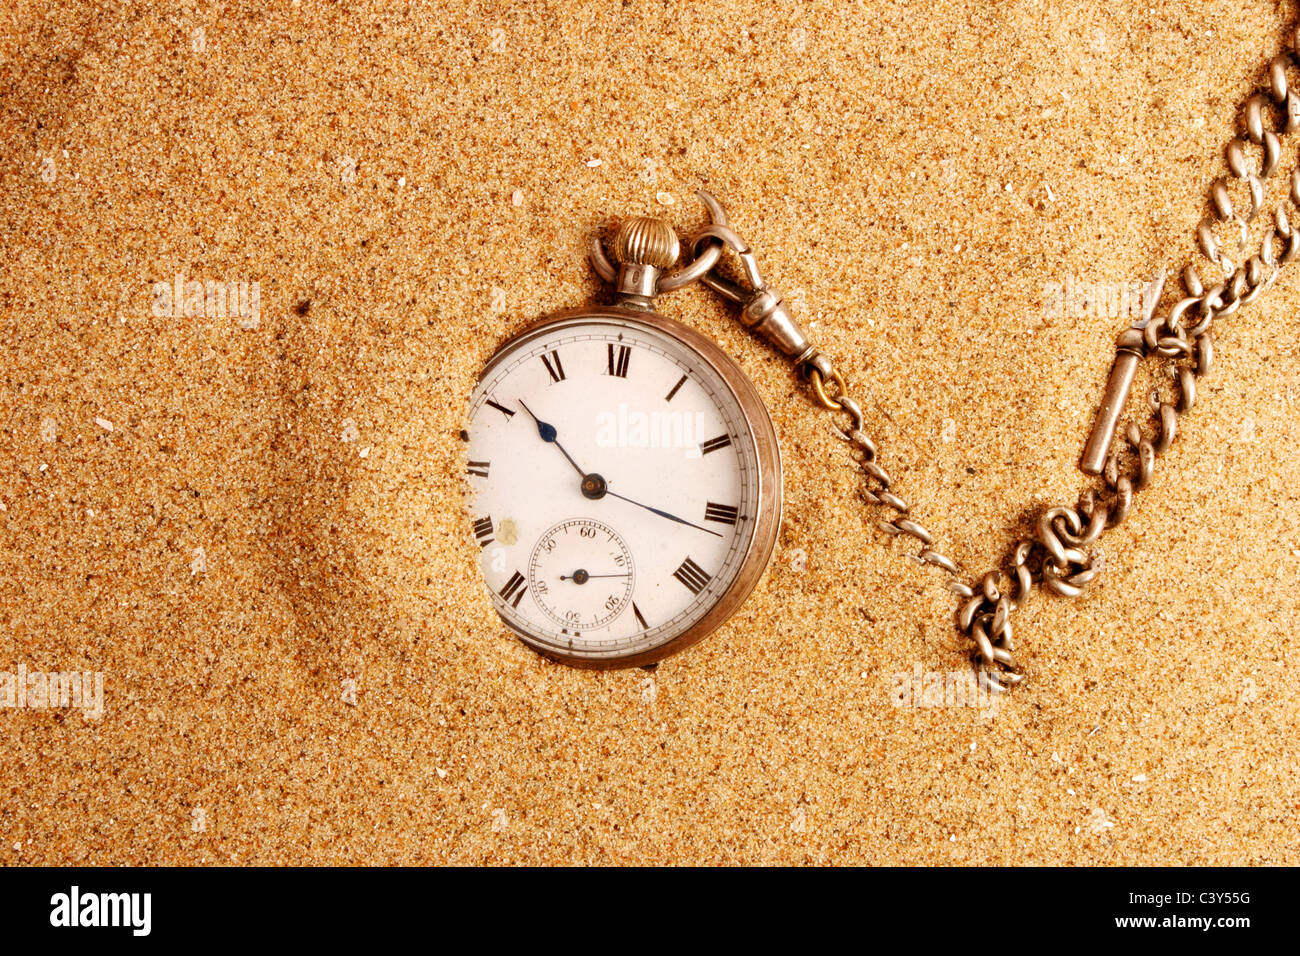 Antique pocket watch on sand Stock Photo